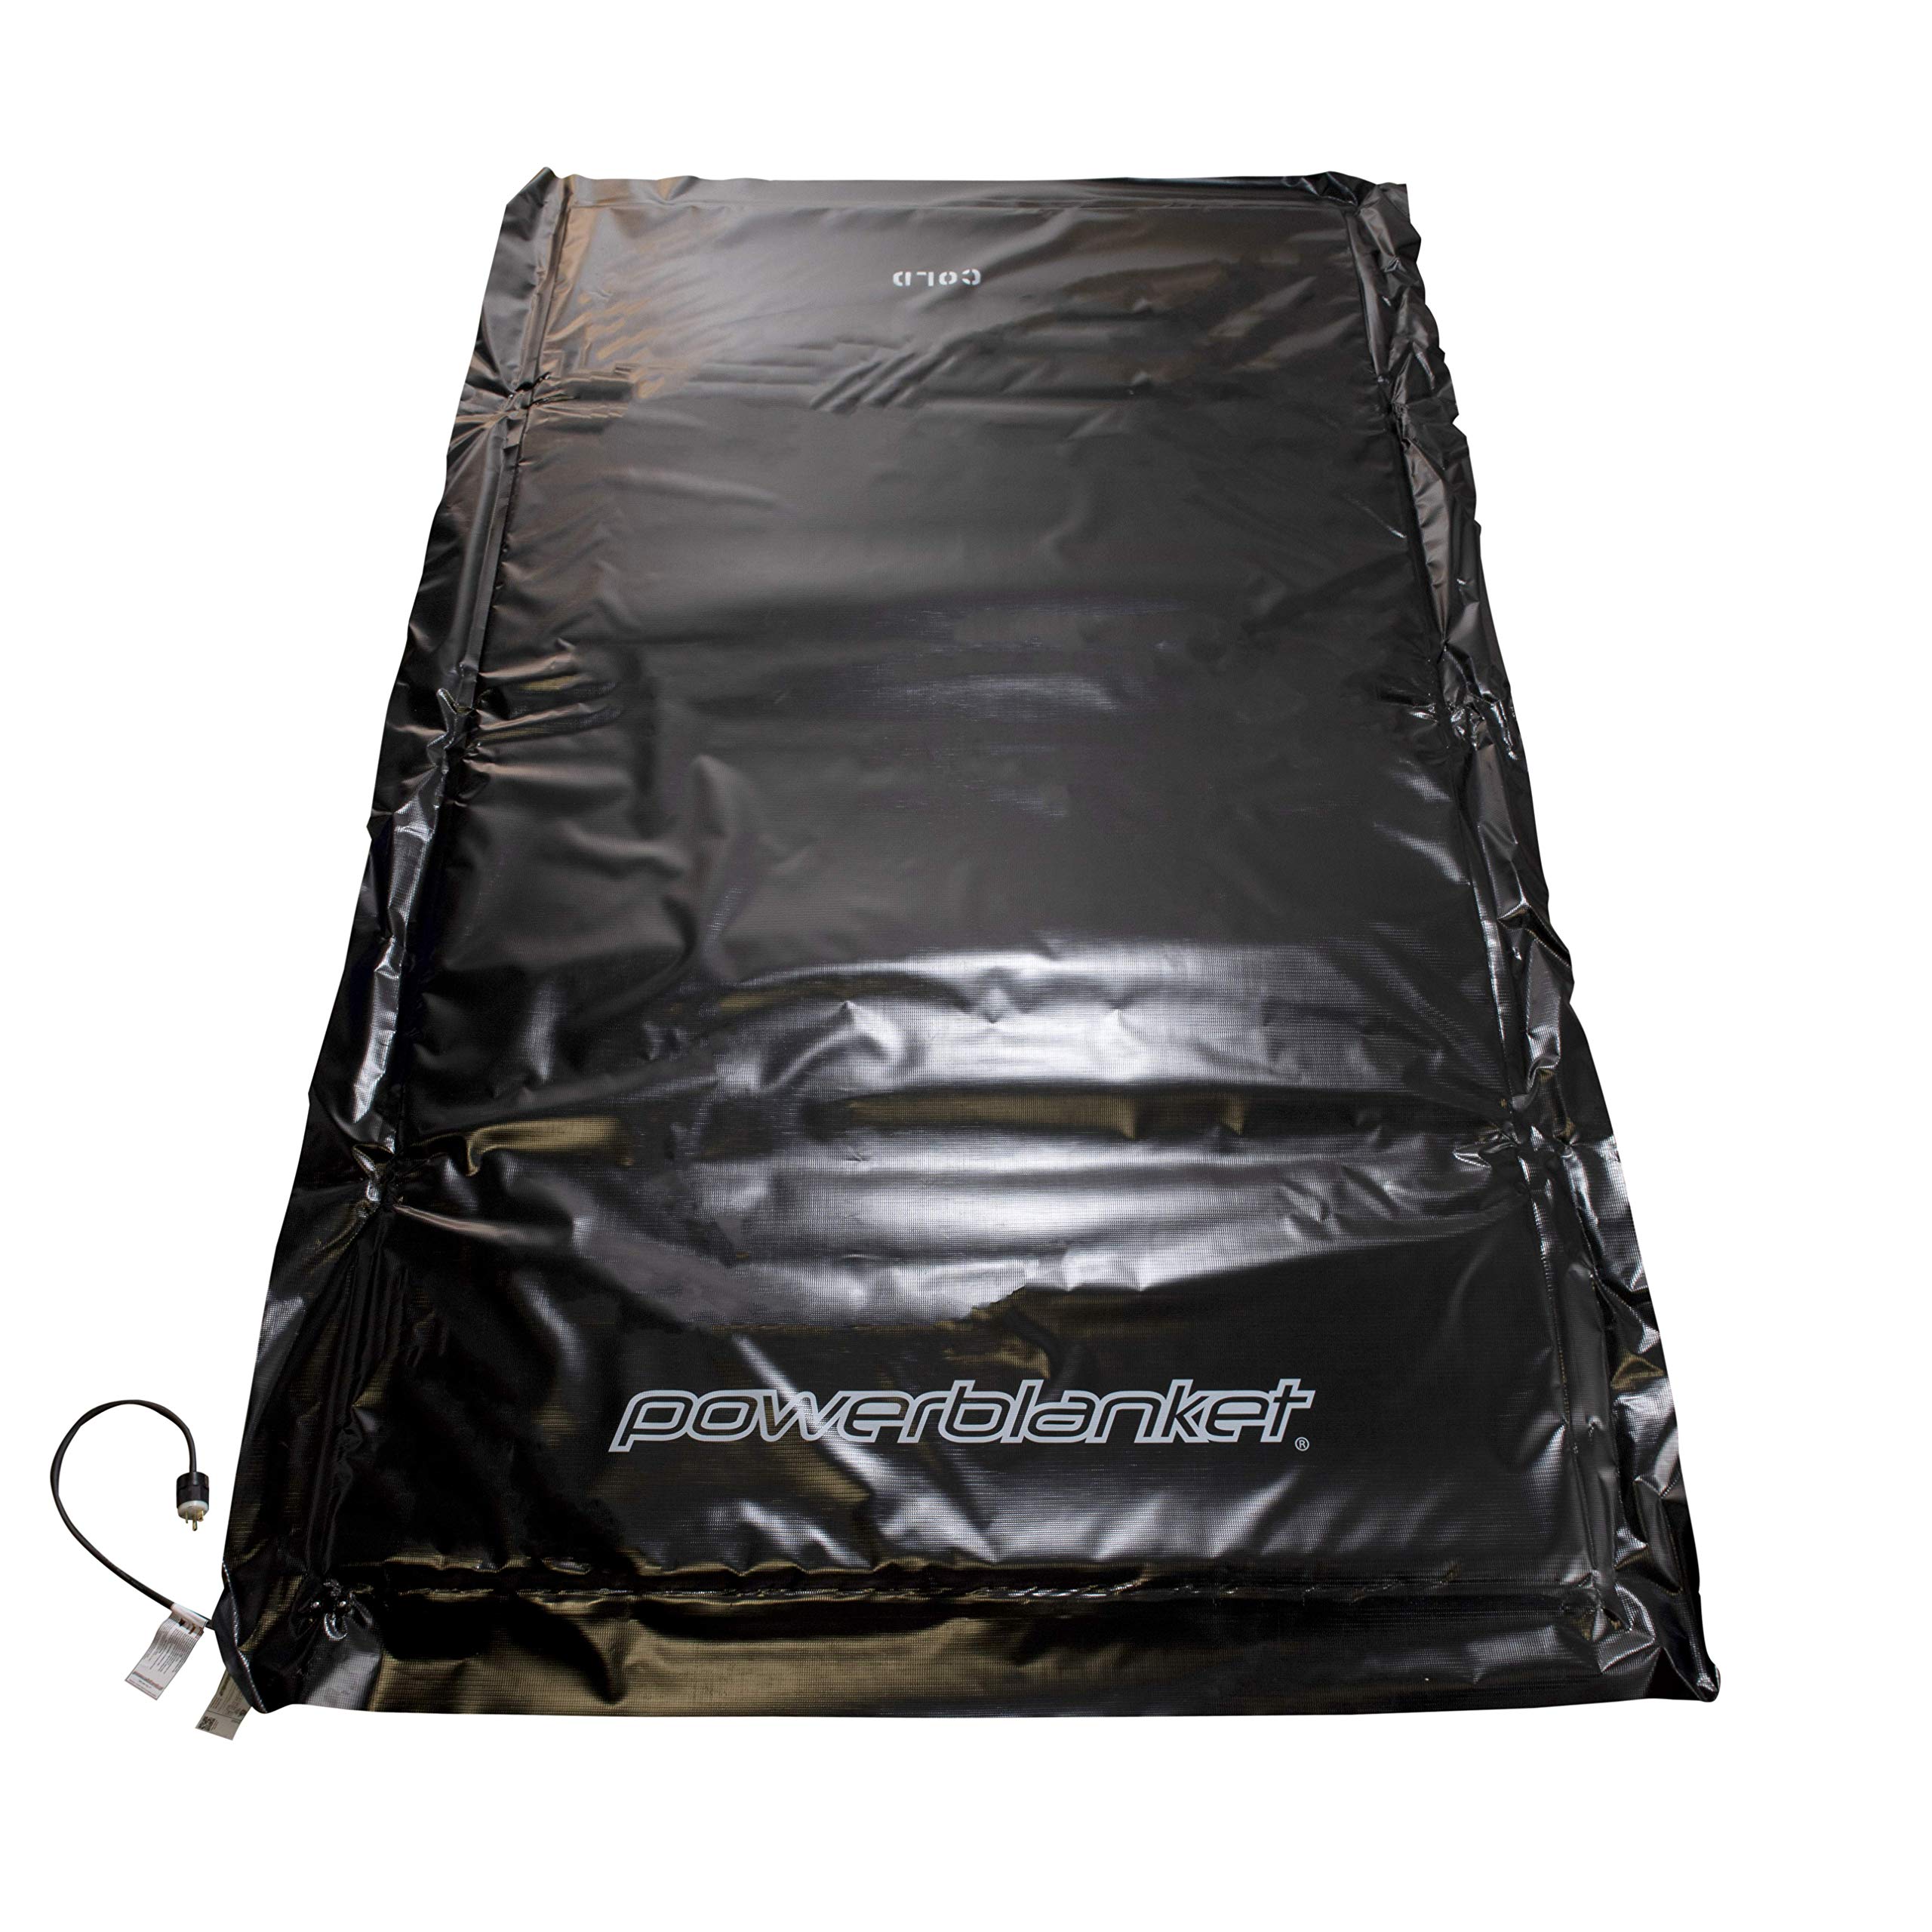 Powerblanket EH0304 Одеяло для оттаивания грунта - 3 фута x 4 фута с подогревом - 4 фута x 5 футов в готовом виде